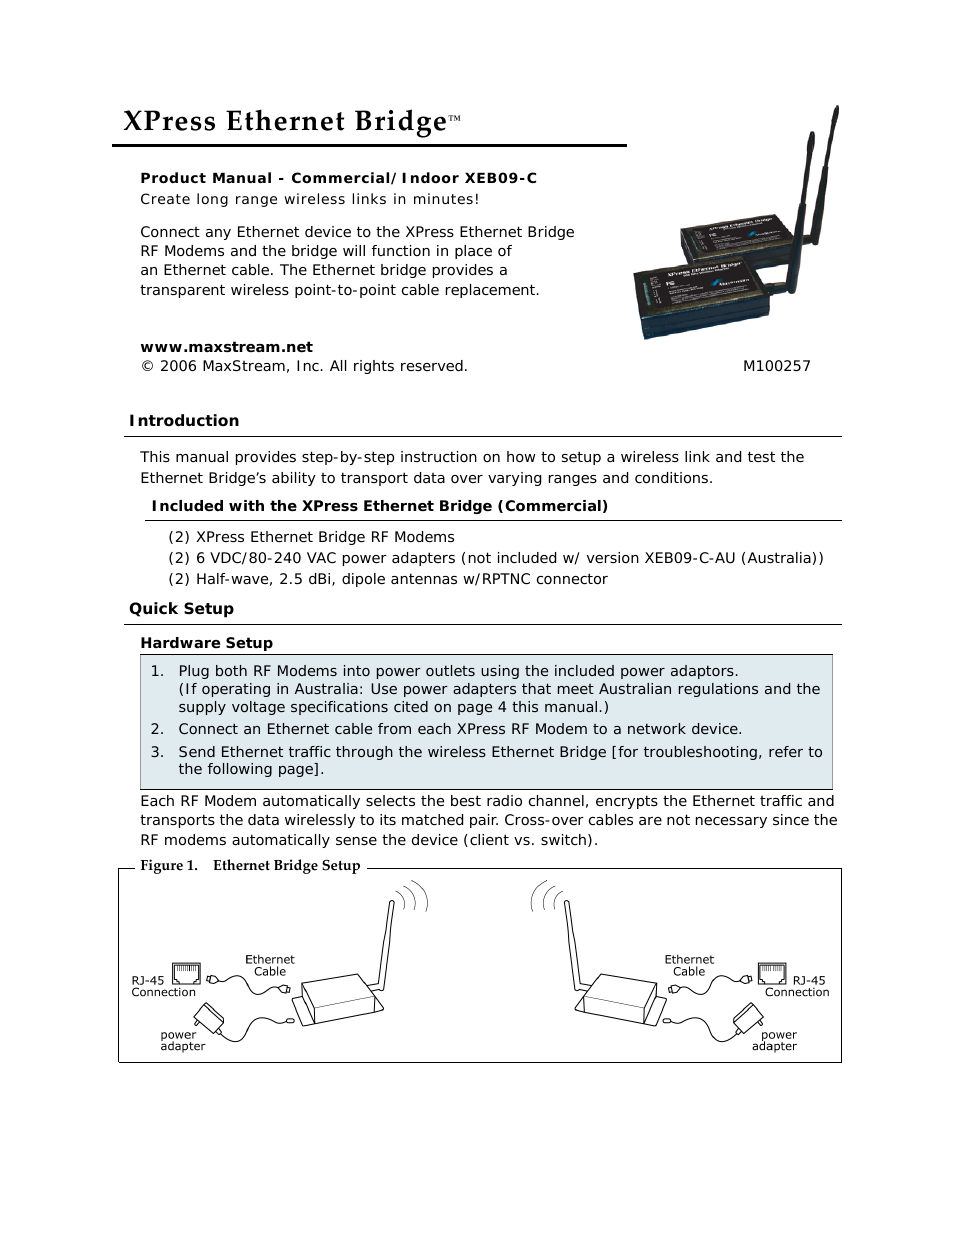 Ethernet Bridge XEB09-C